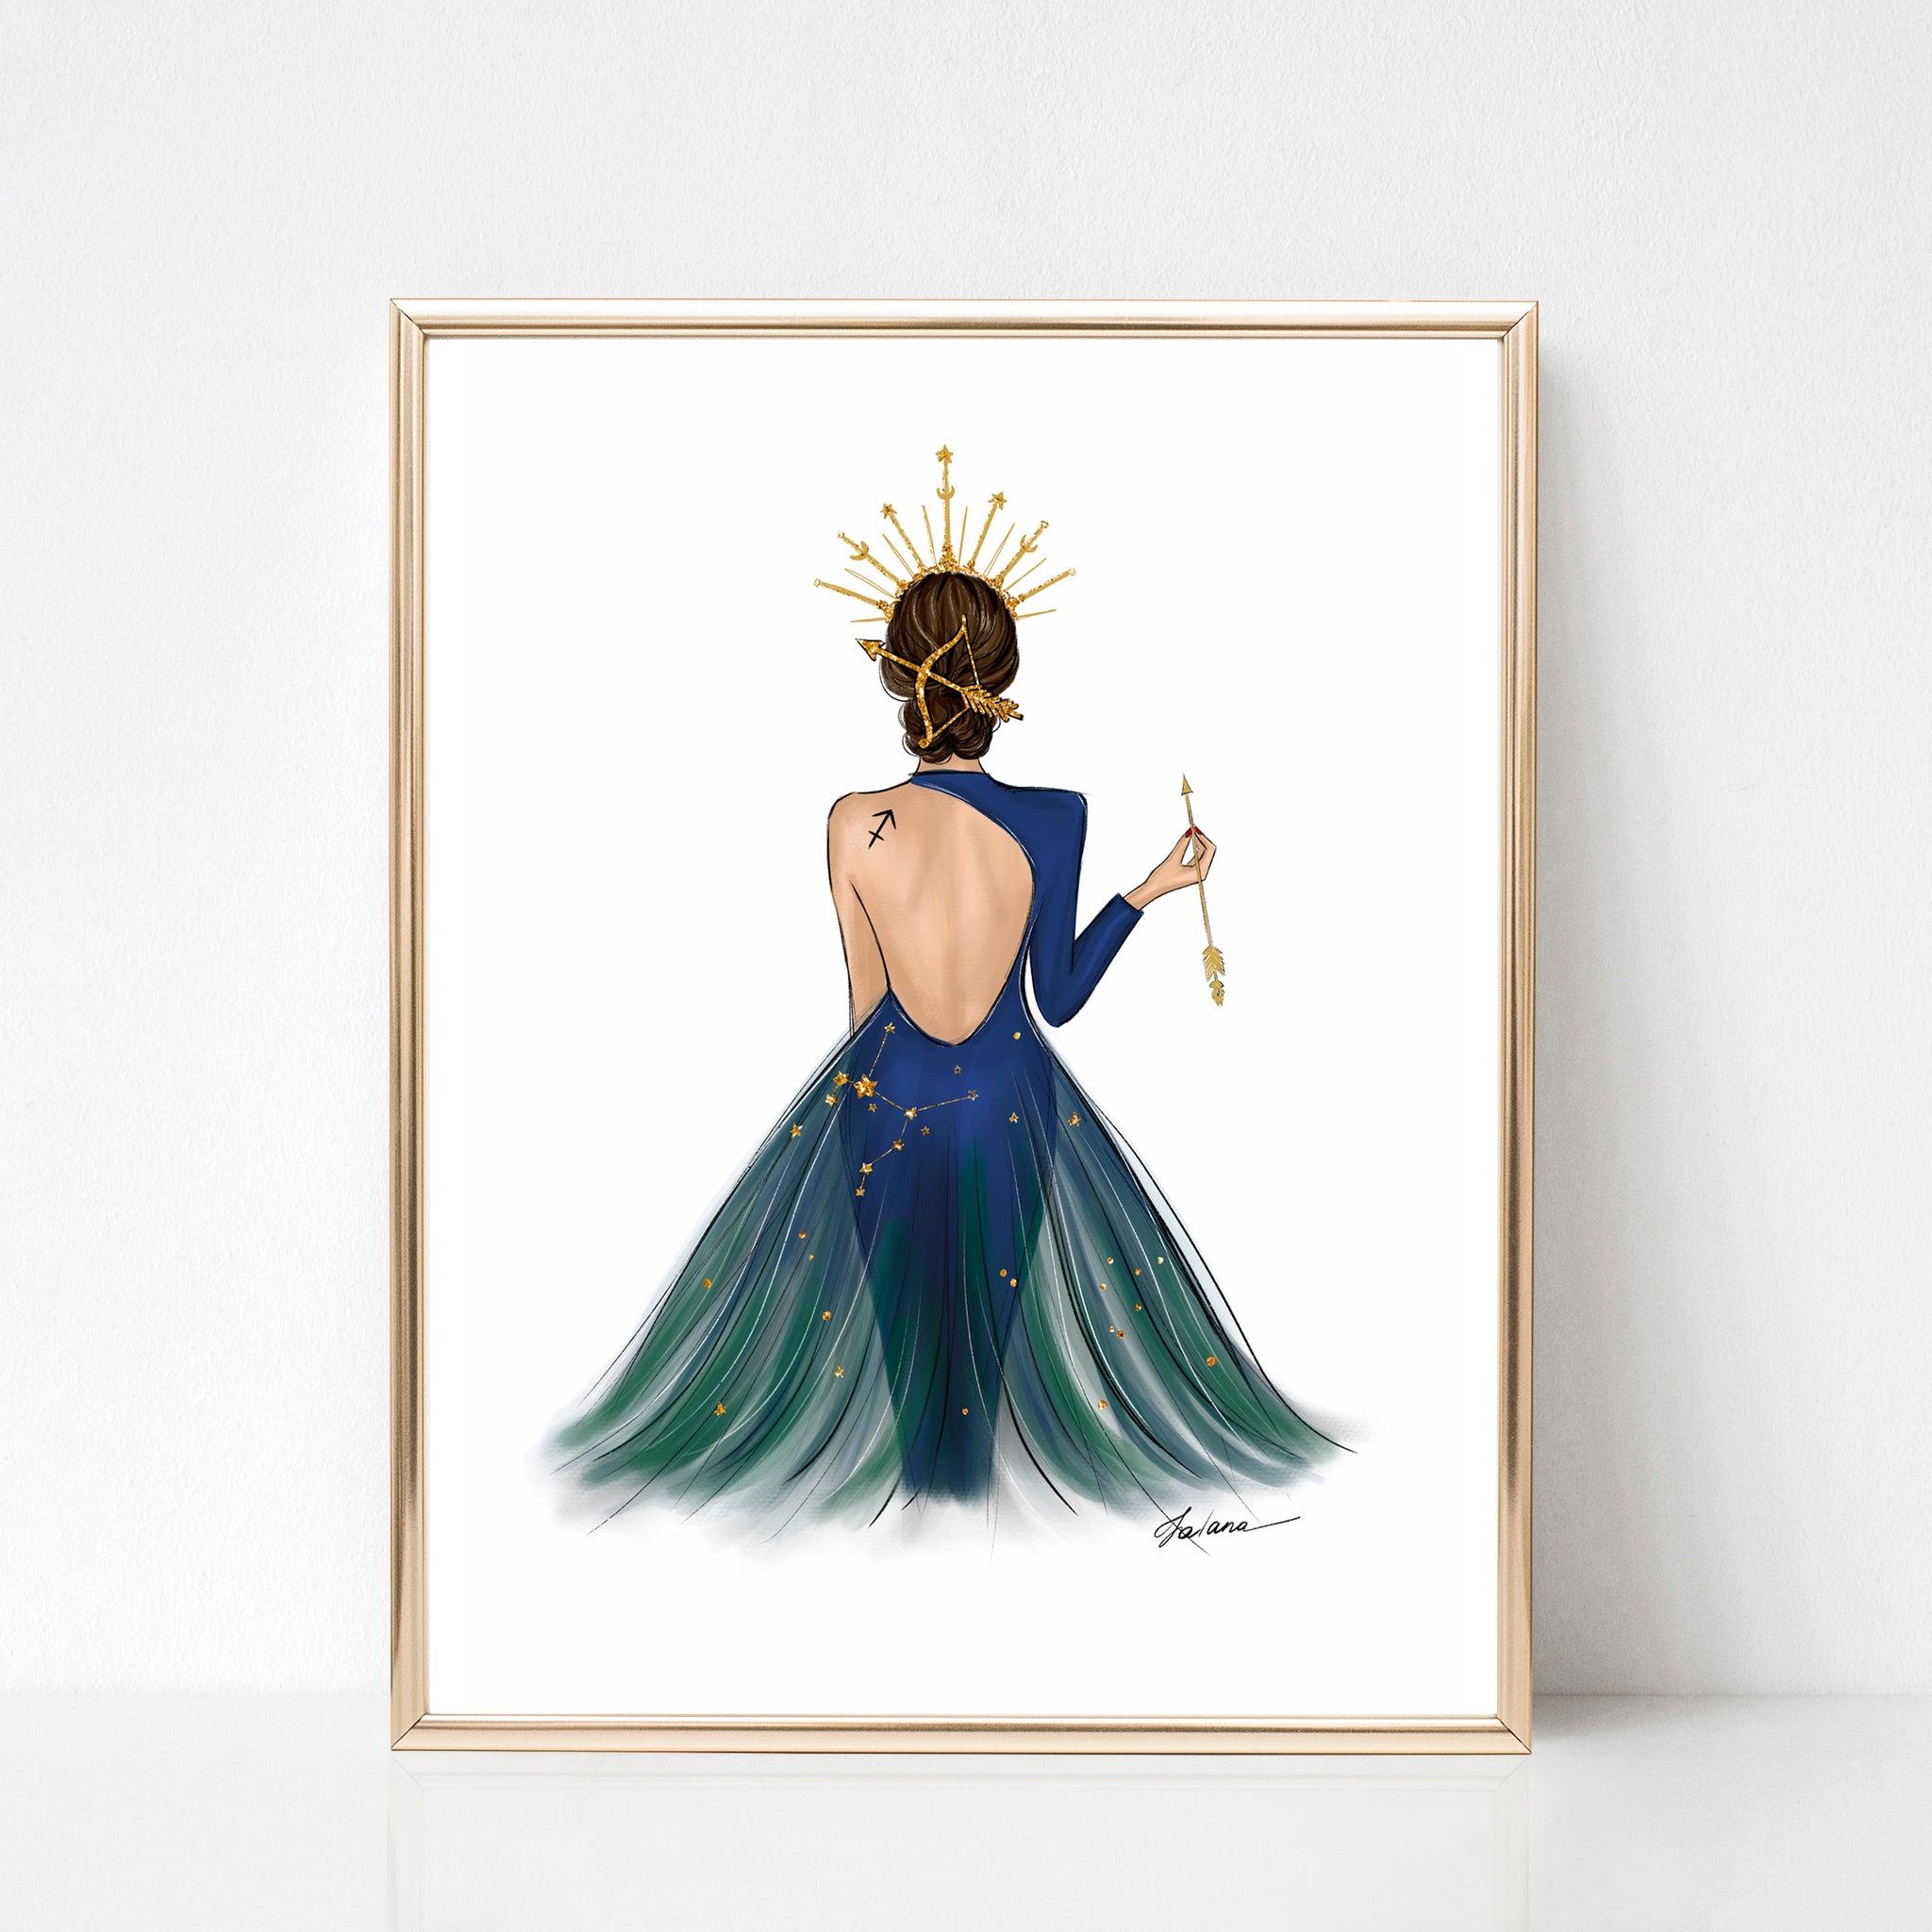 Sagittarius Sign Girl in blue dress Zodiac inspired fashion illustration art print